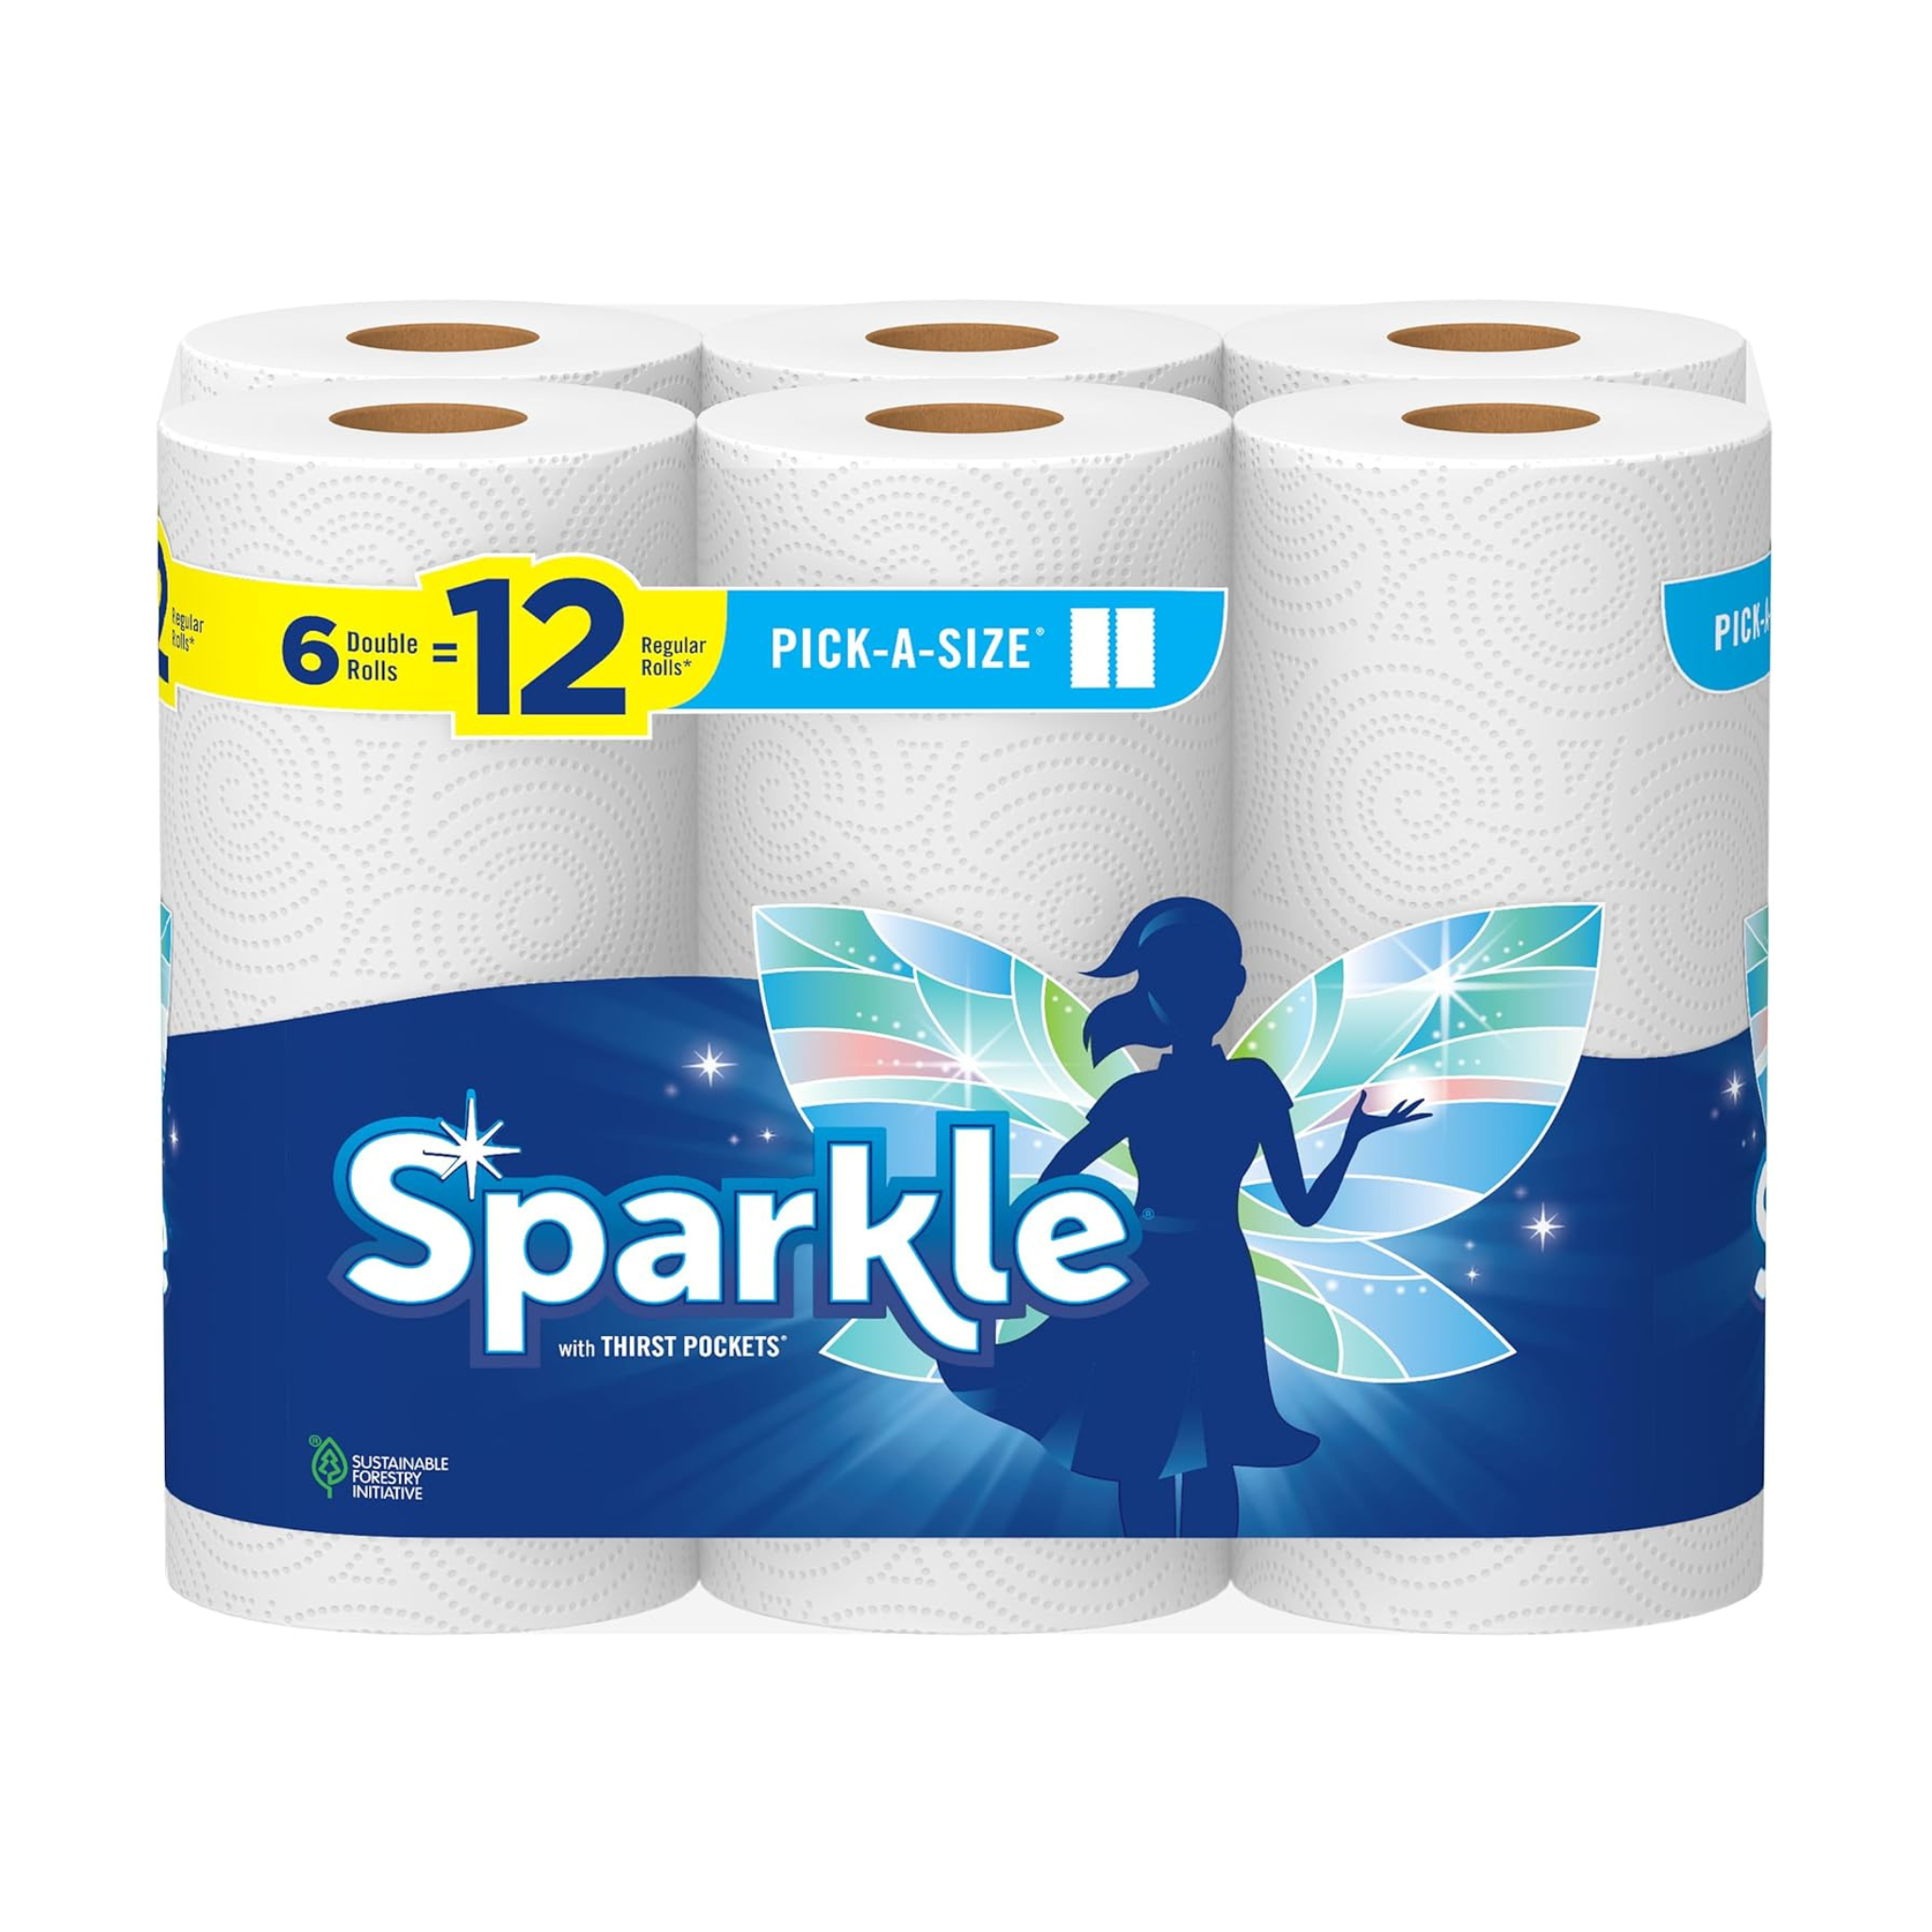 6-Pack Sparkle Double Rolls Pick-A-Size Paper Towels